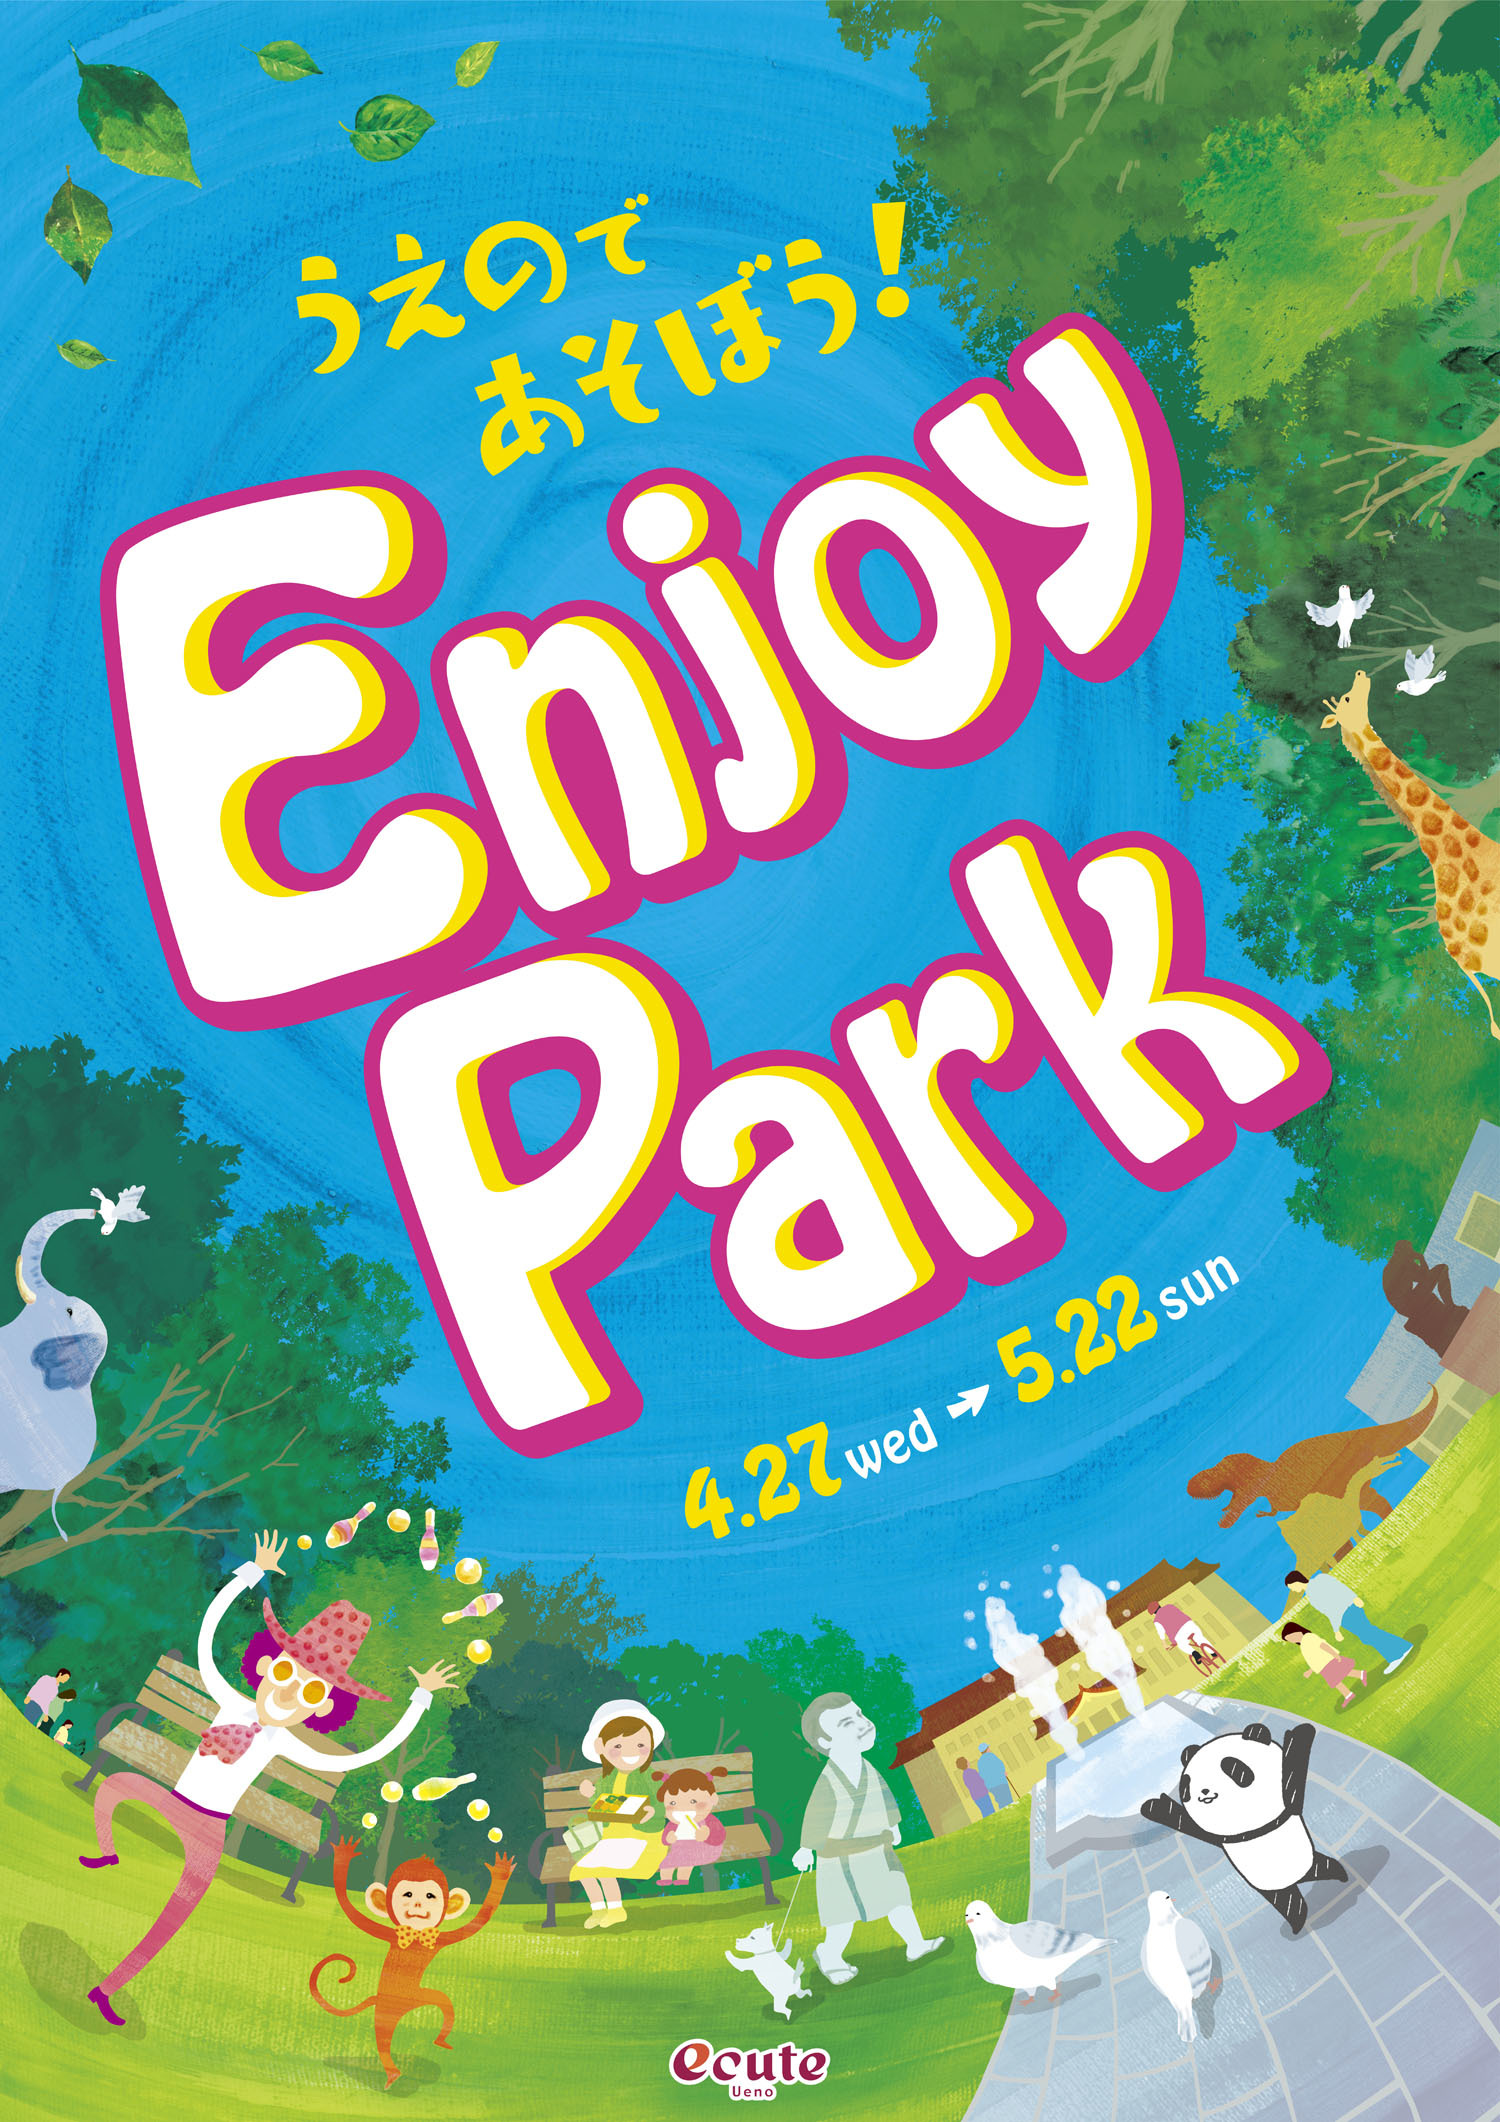 『Enjoy Park』 キャンペーン